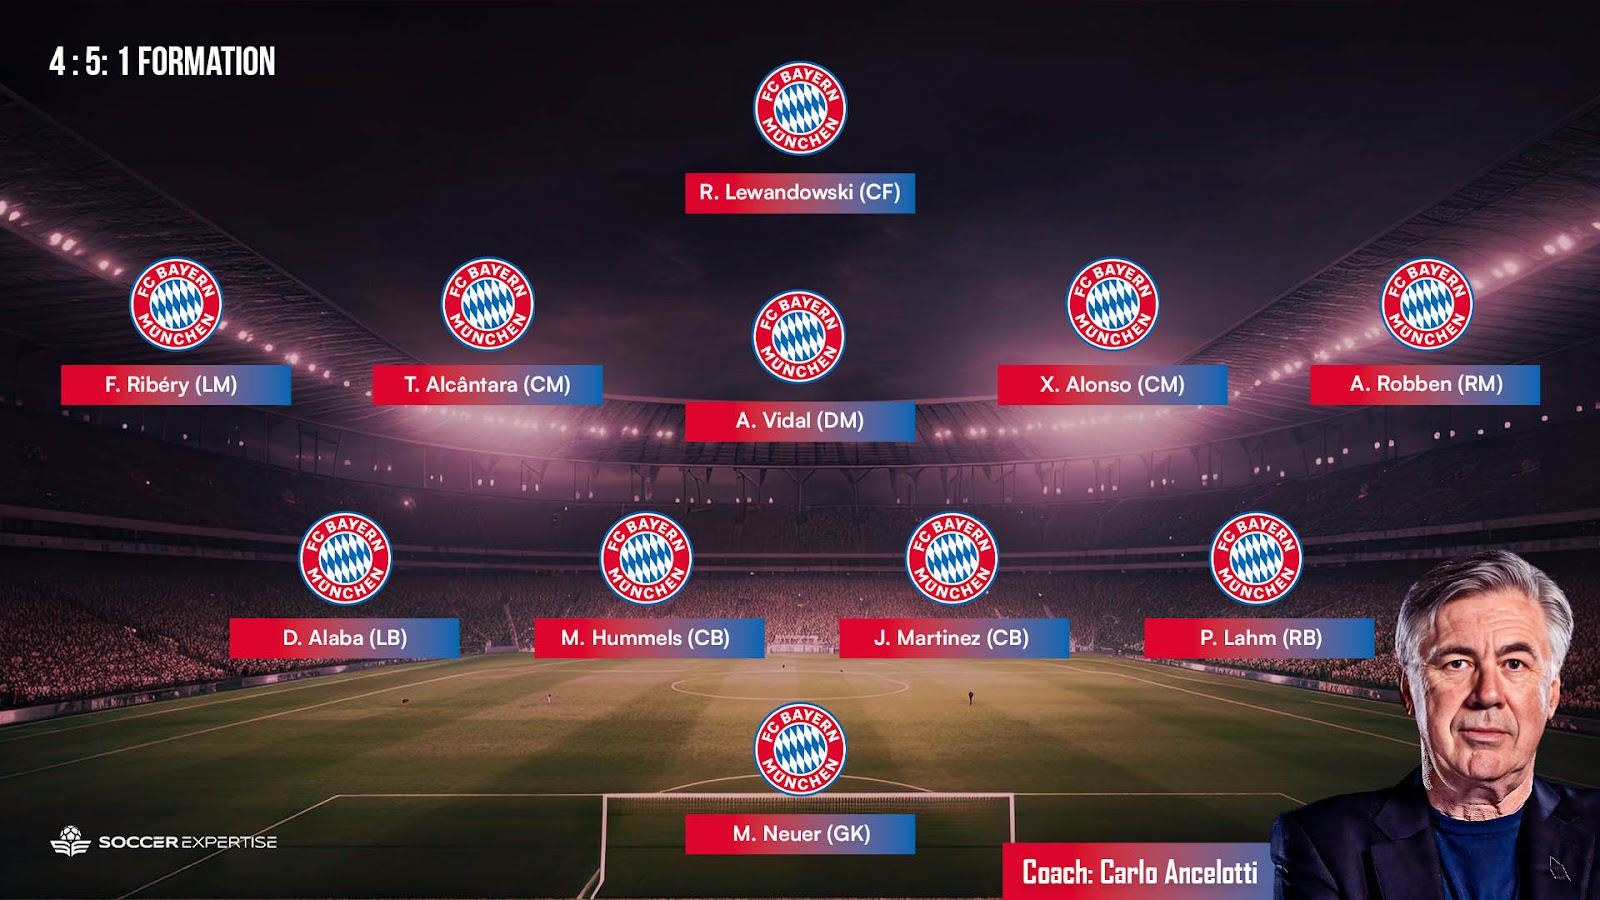 Carlo Ancelotti 4-5-1 formation in Bayern Munich